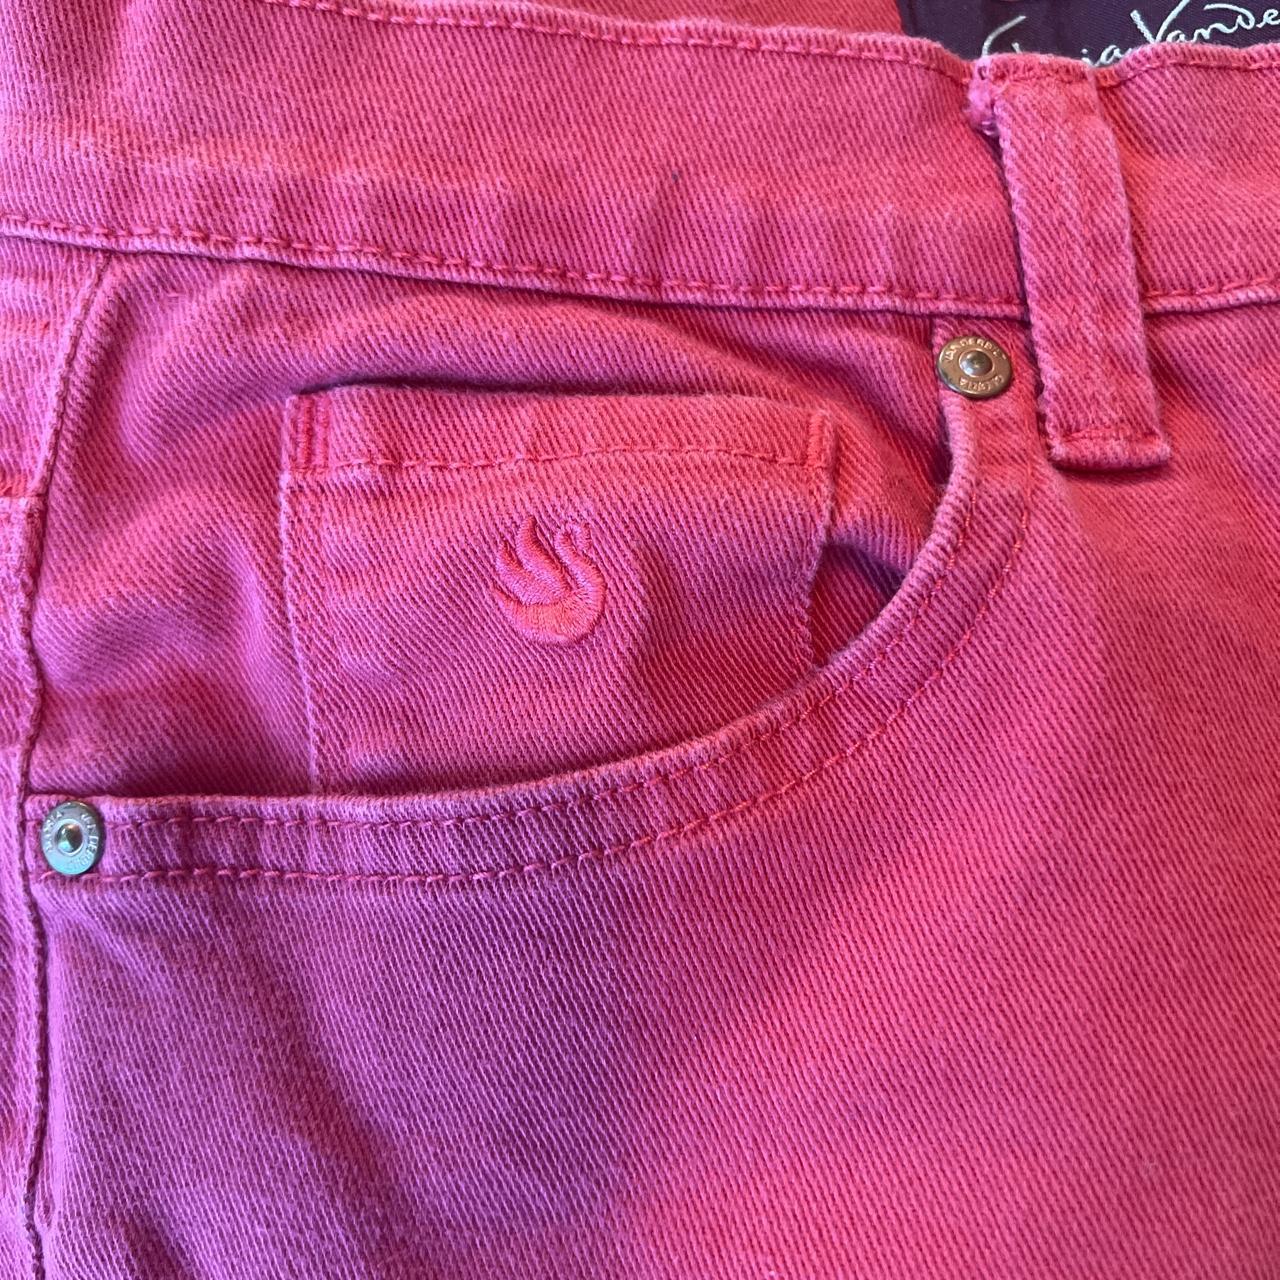 Gloria Vanderbilt flare jeans in bright RED! These - Depop